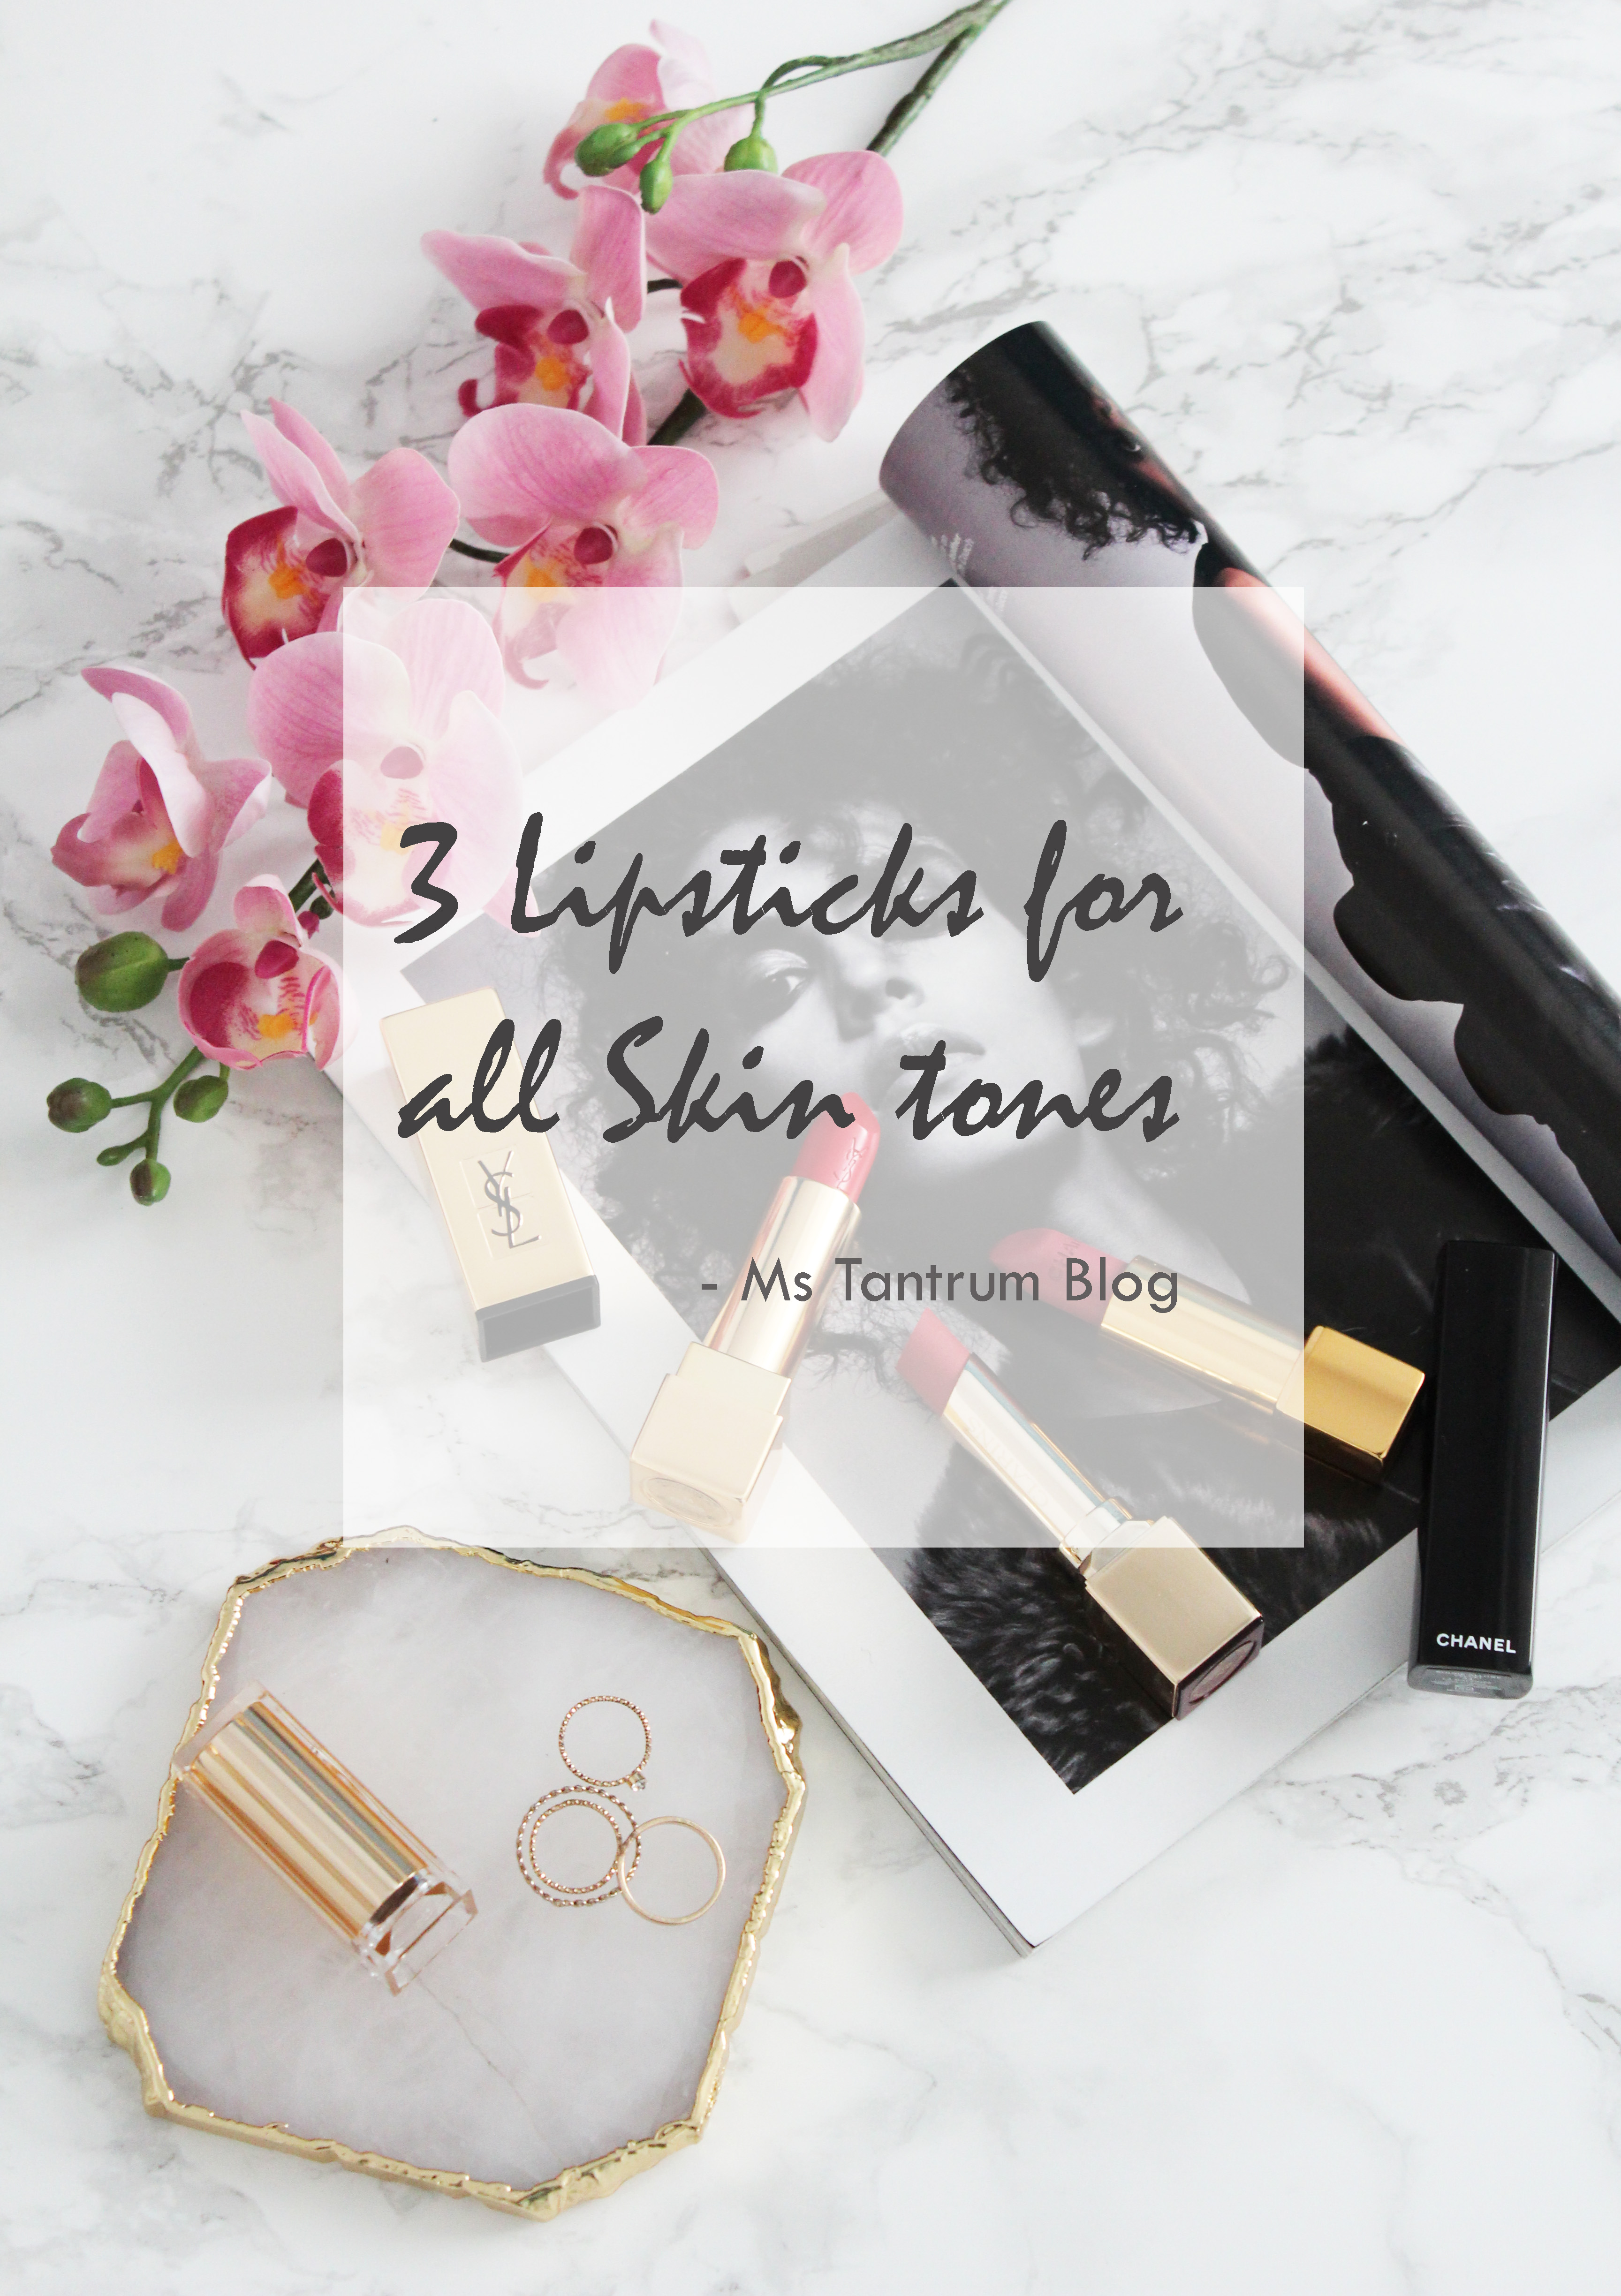 3 lipsticks for all skin tones - Ms Tantrum Blog